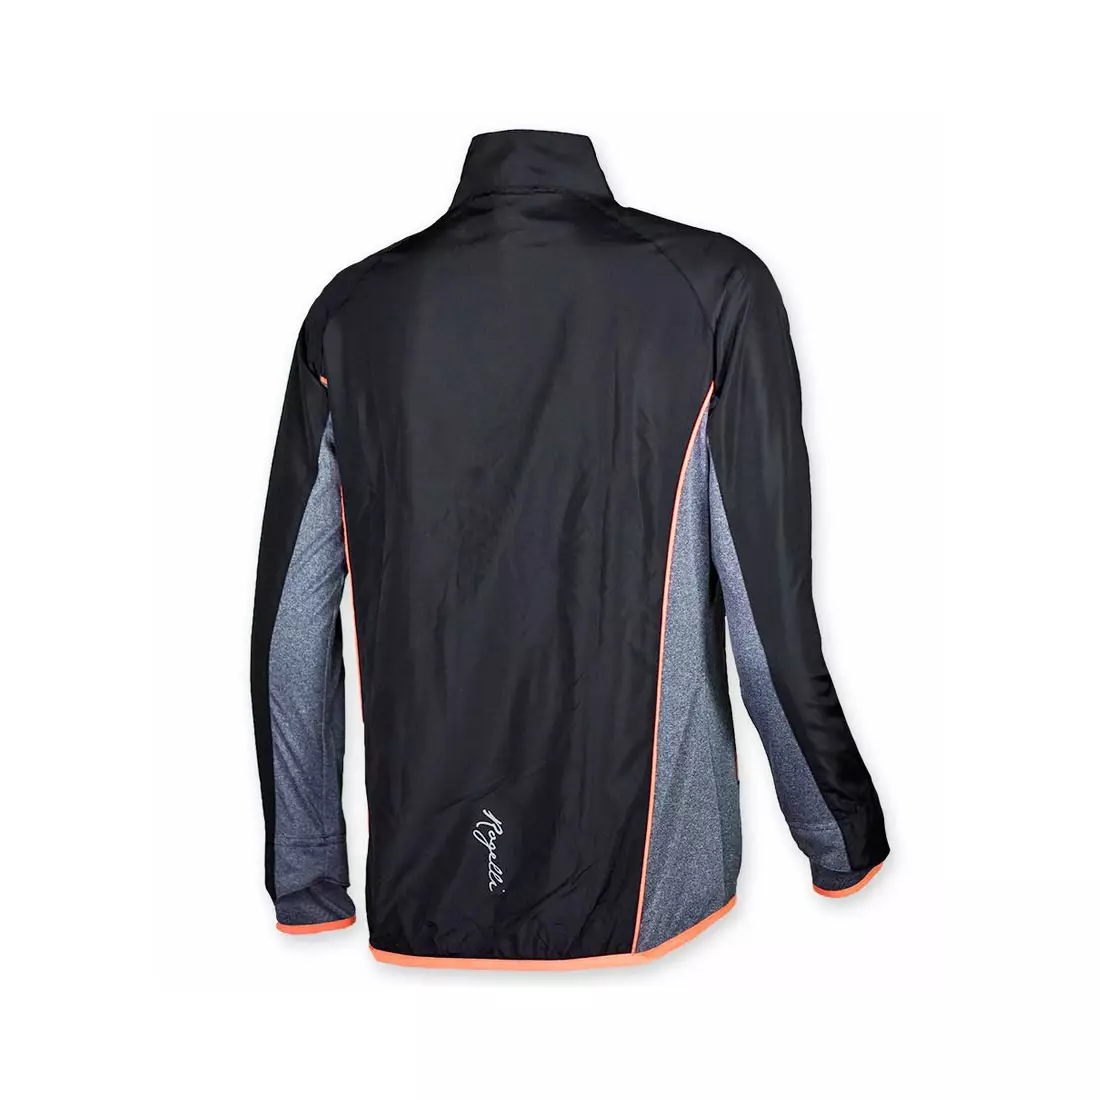 ROGELLI MARITA - dámská běžecká bunda, větrovka 840.860 - černá a růžová (korálová)